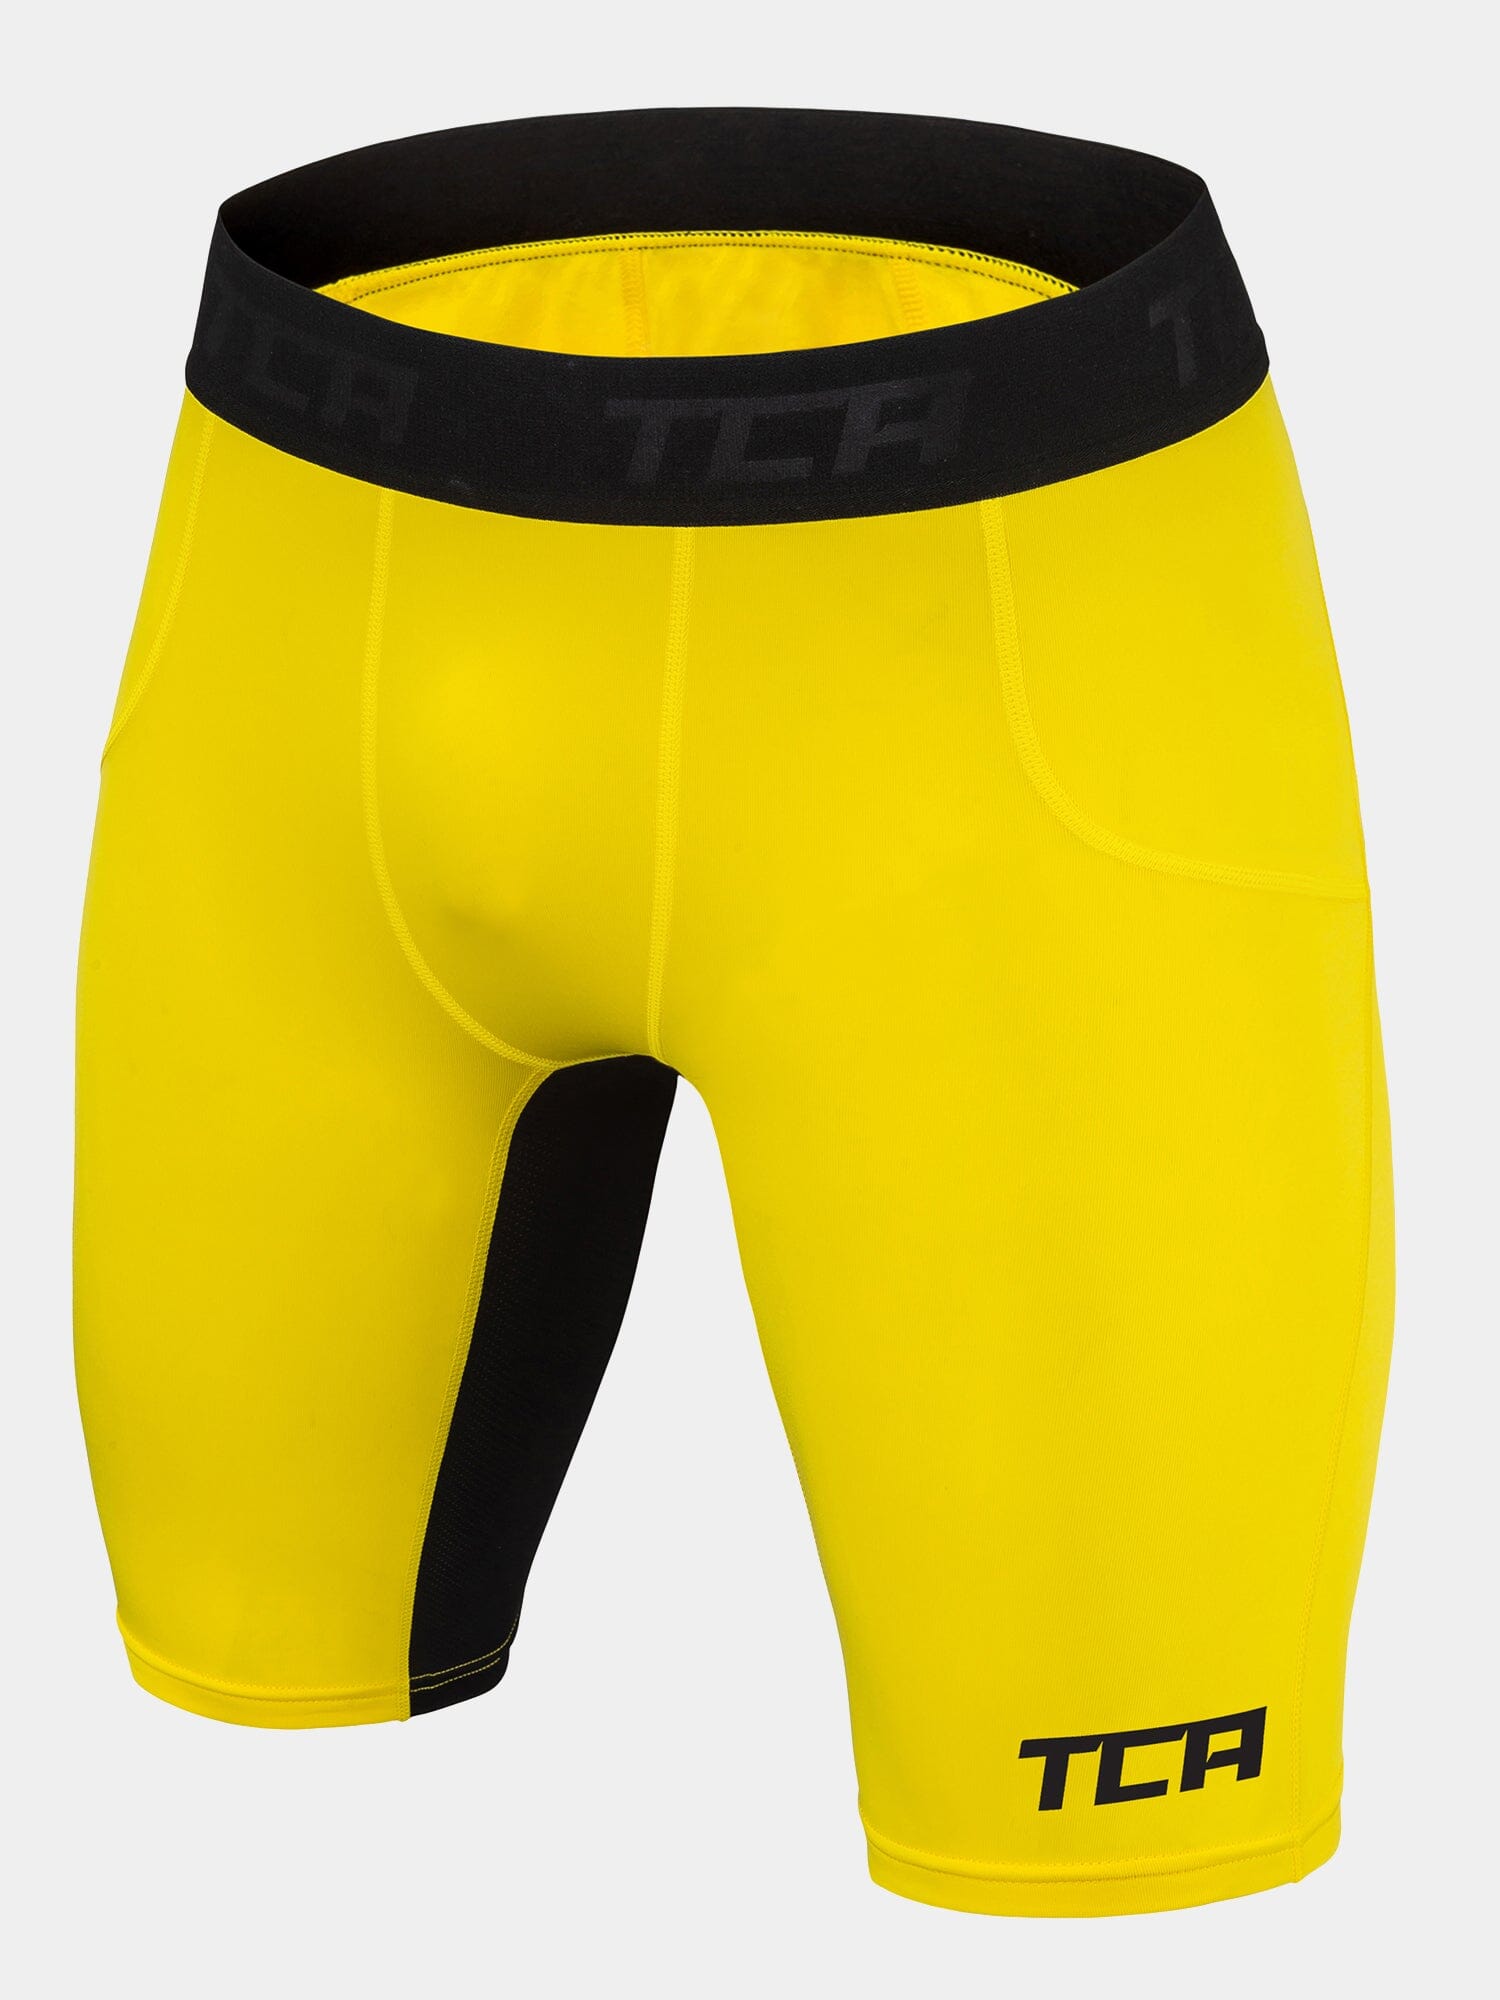 Black Yellow Skins Baselayer Shorts